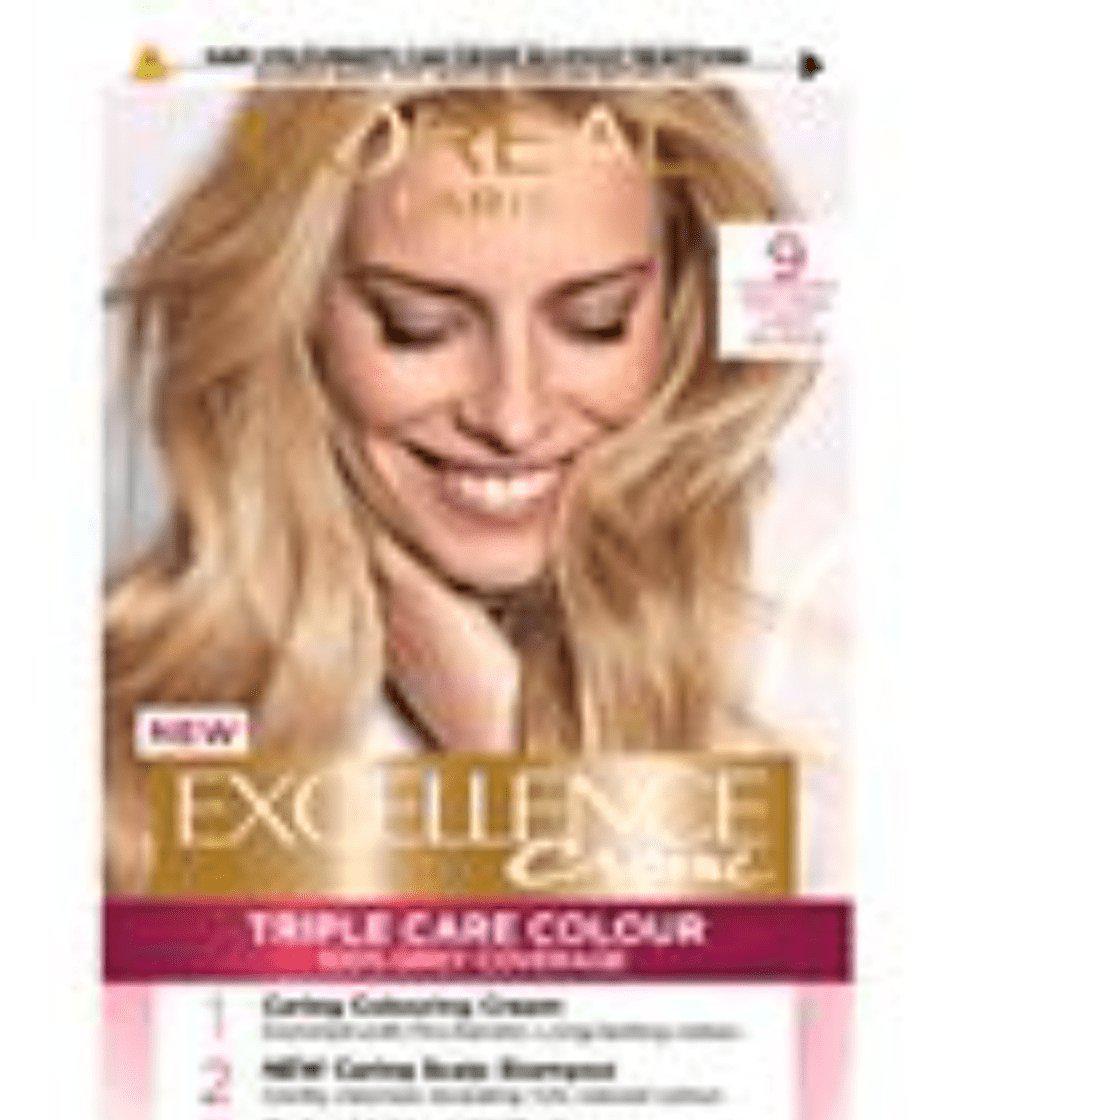 L'oreal Excellence Crème Permanent Hair Dye - Triple Care - Natural Light Blonde 9 - Healthxpress.ie